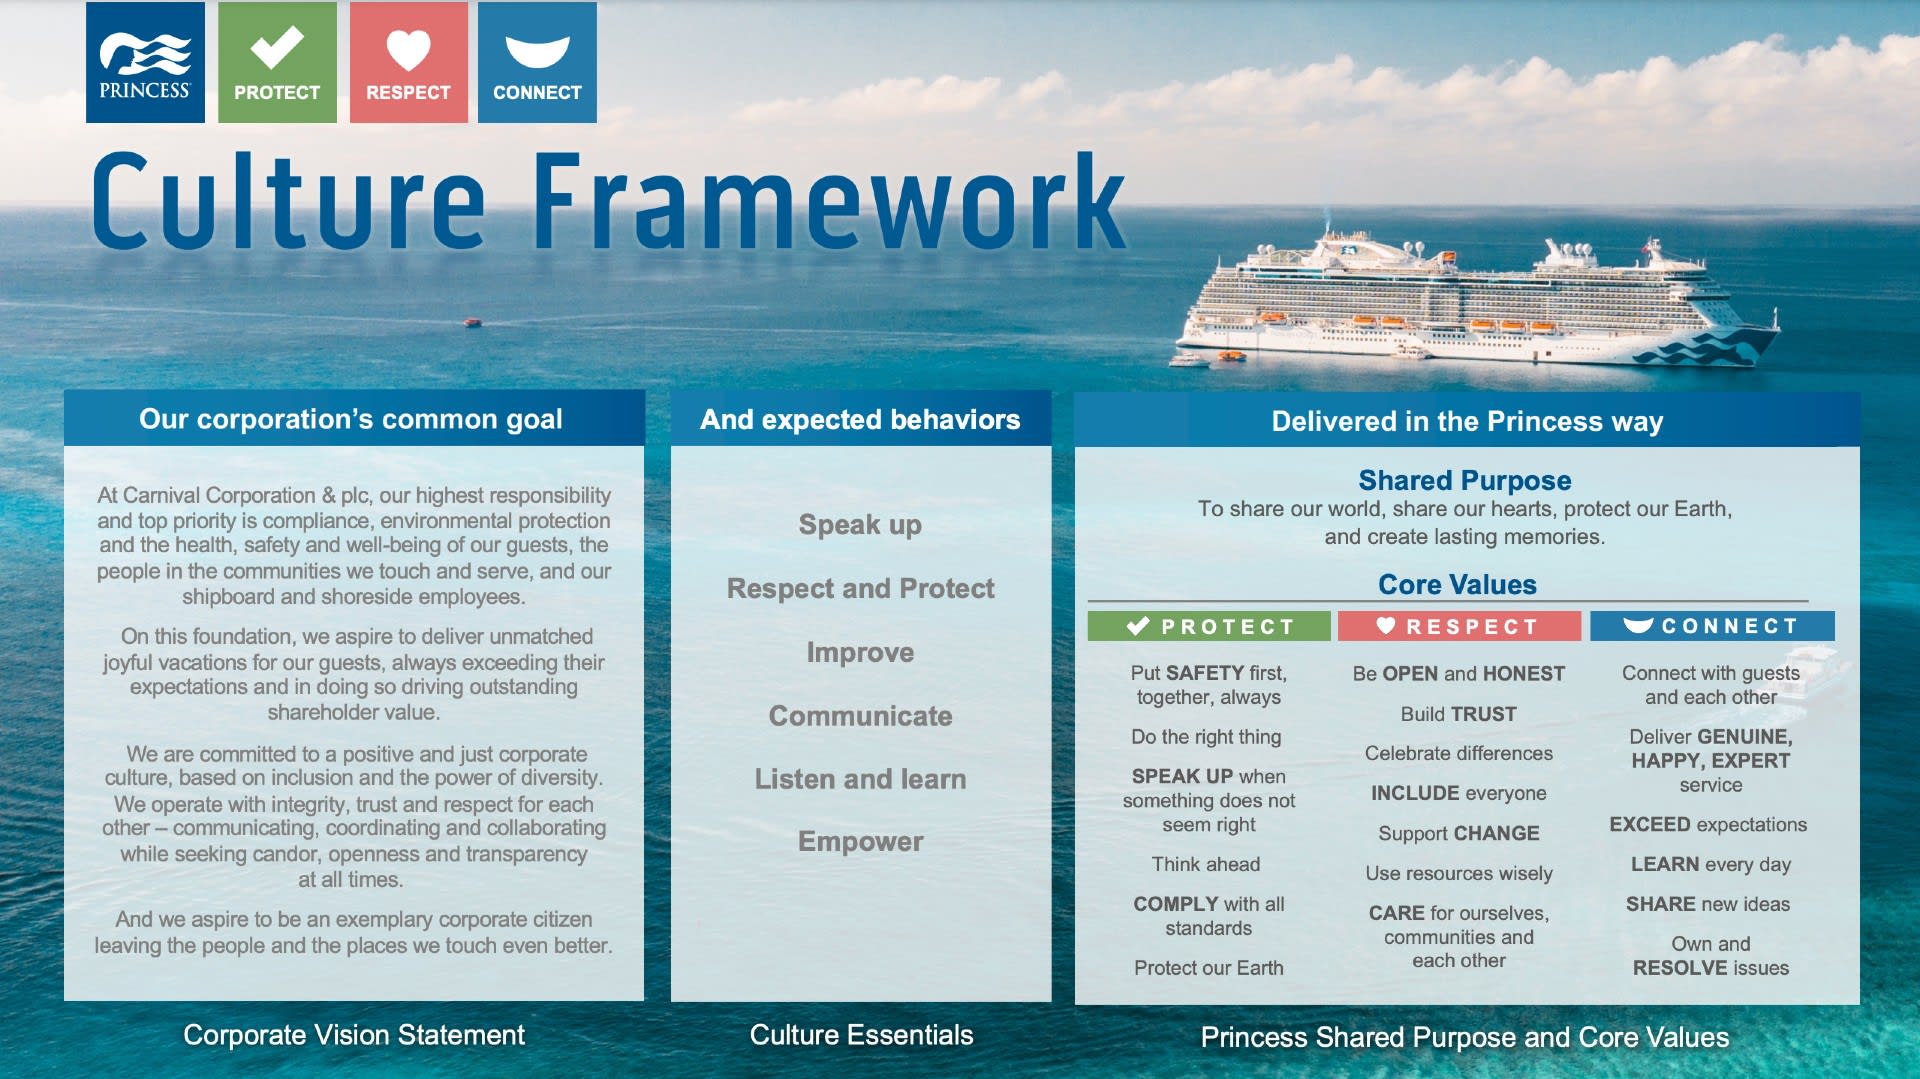 Princess Culture Framework Click View PDF button to access the PDF version